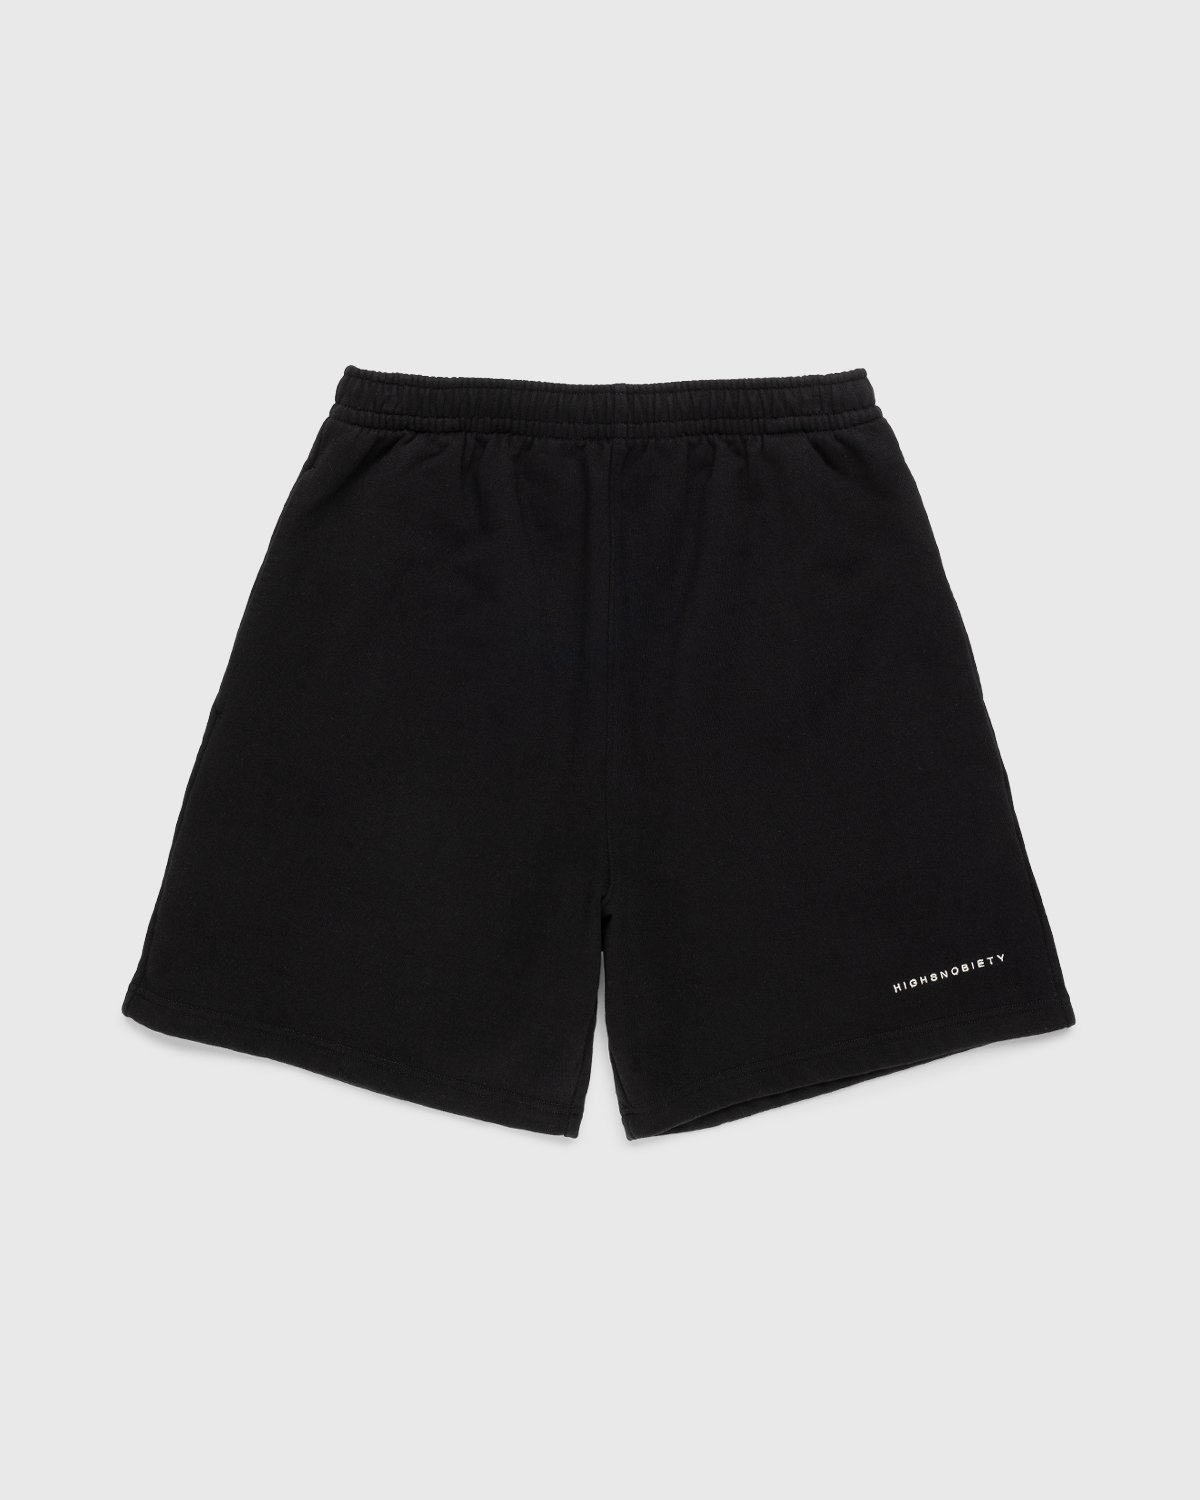 Highsnobiety - Staples Shorts Black - Clothing - Black - Image 1